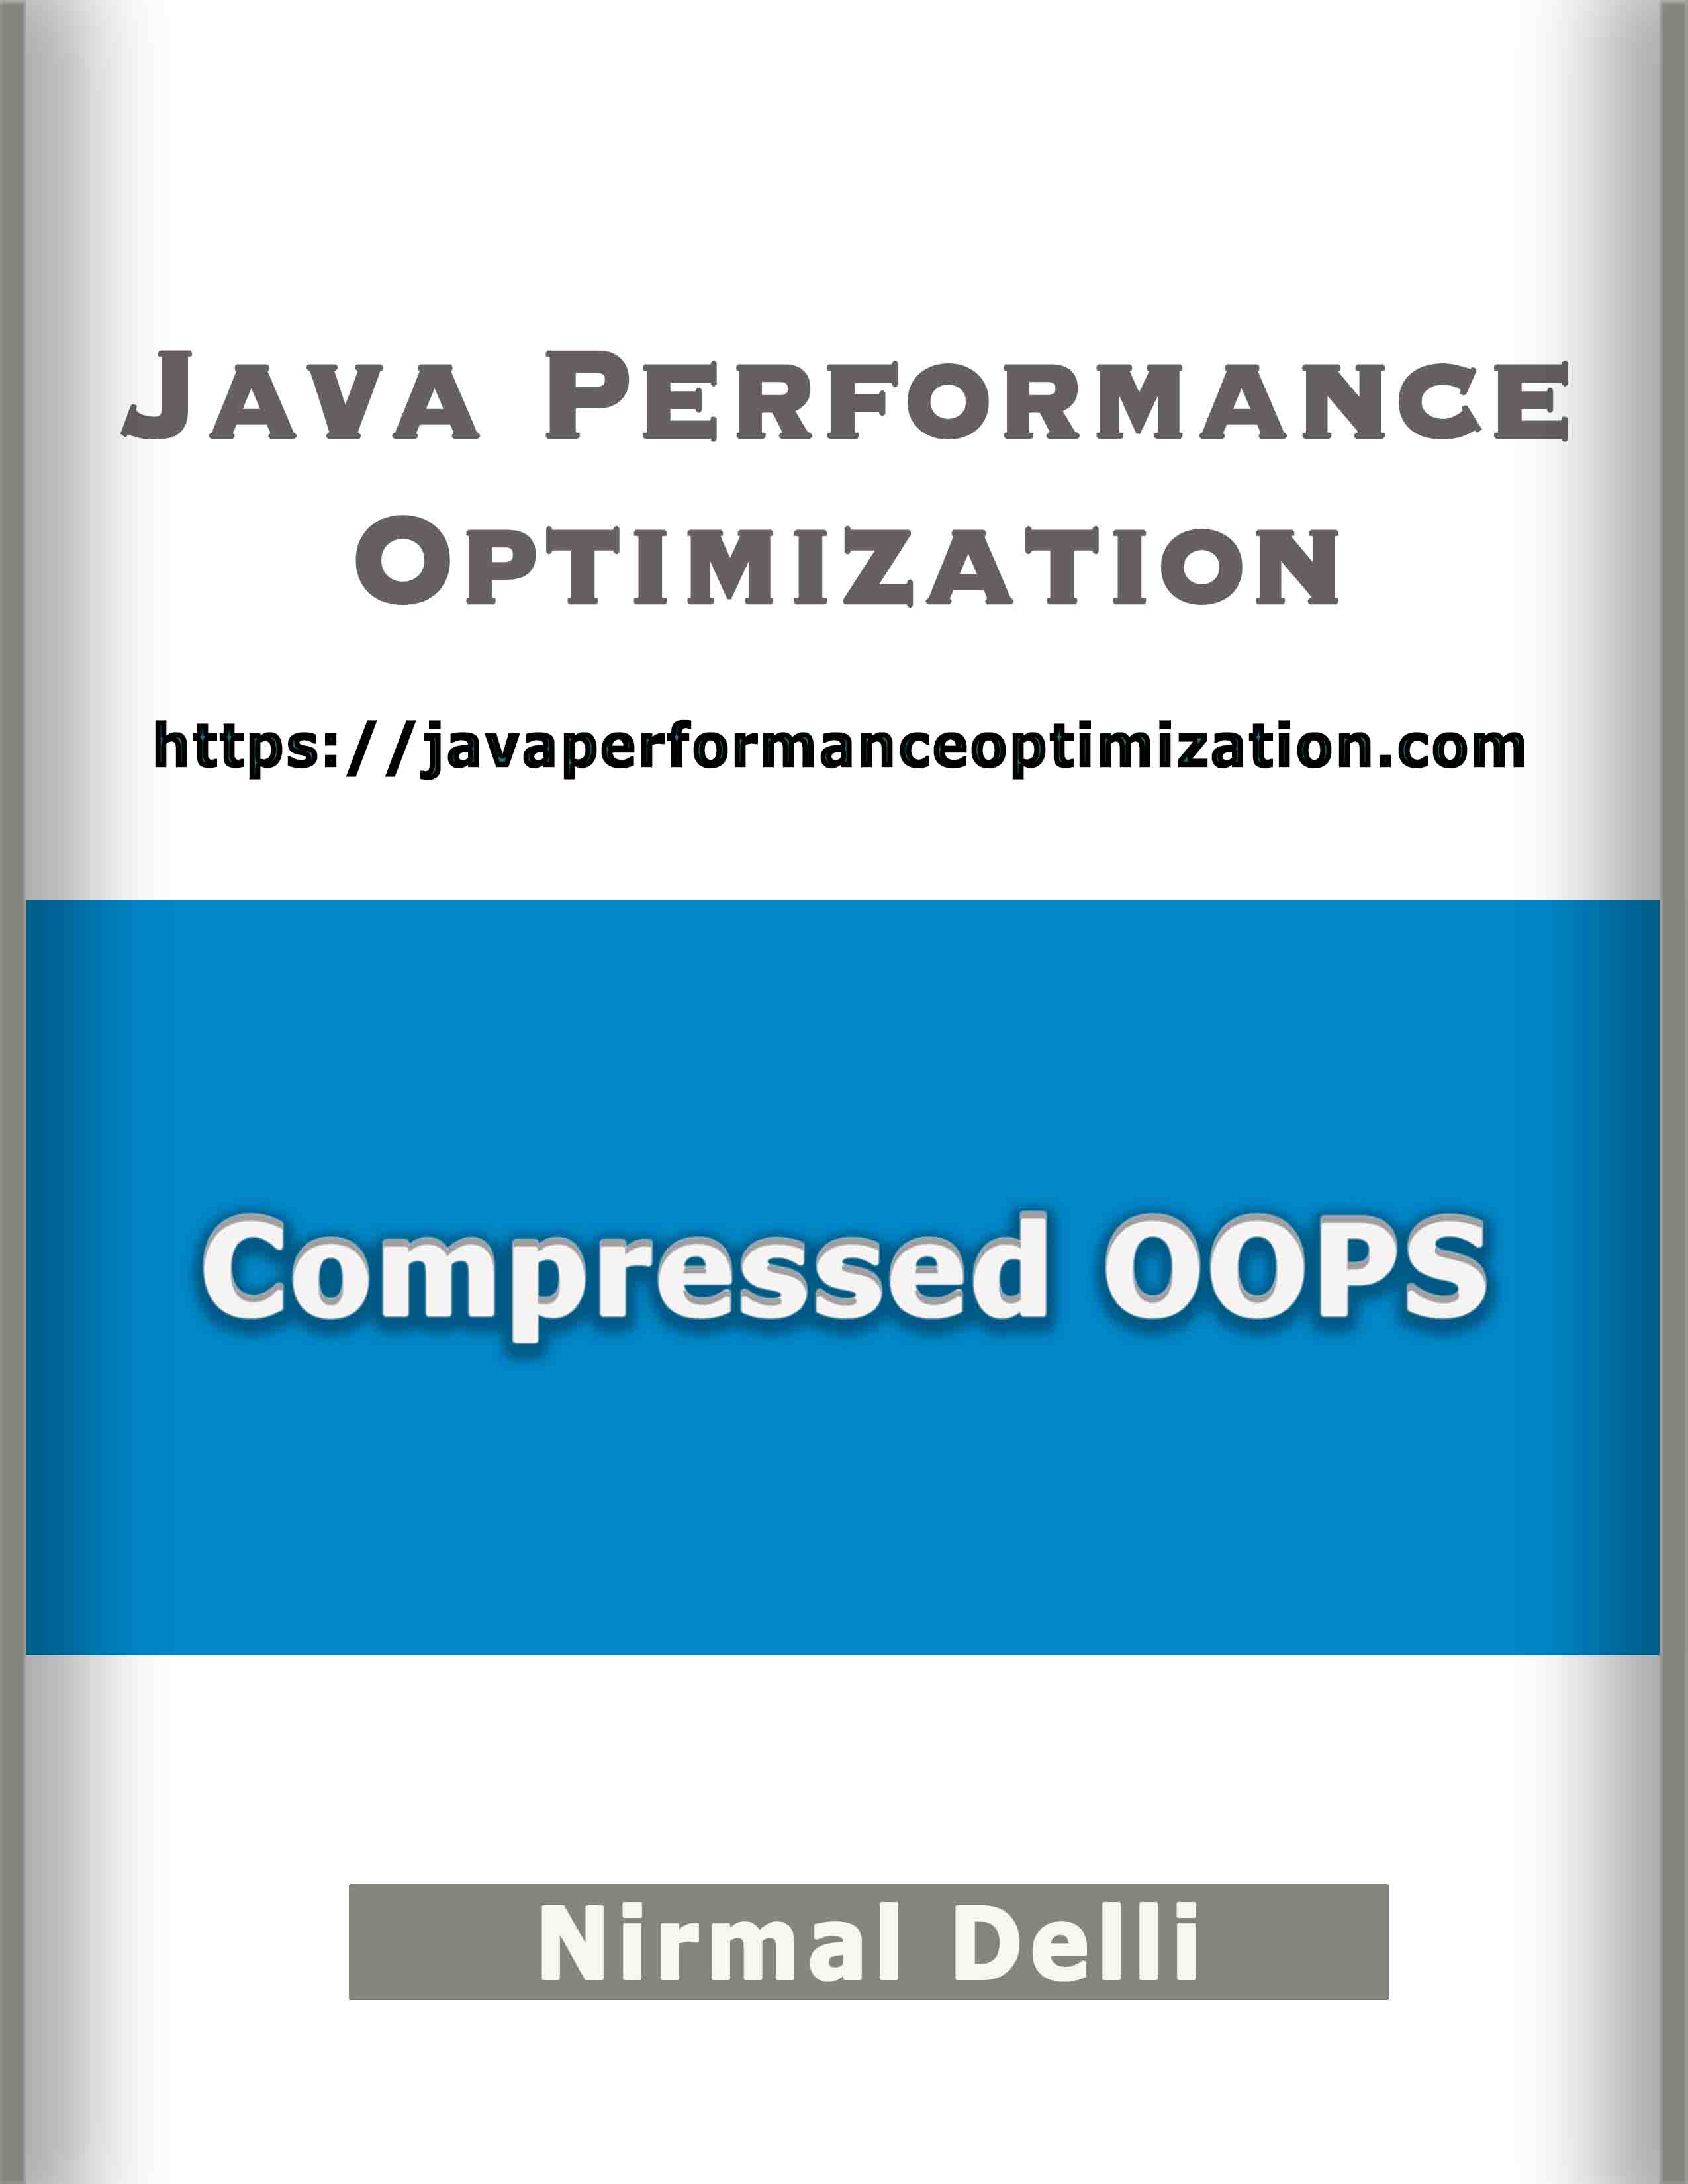 Java performance optimization - Compressed OOPS